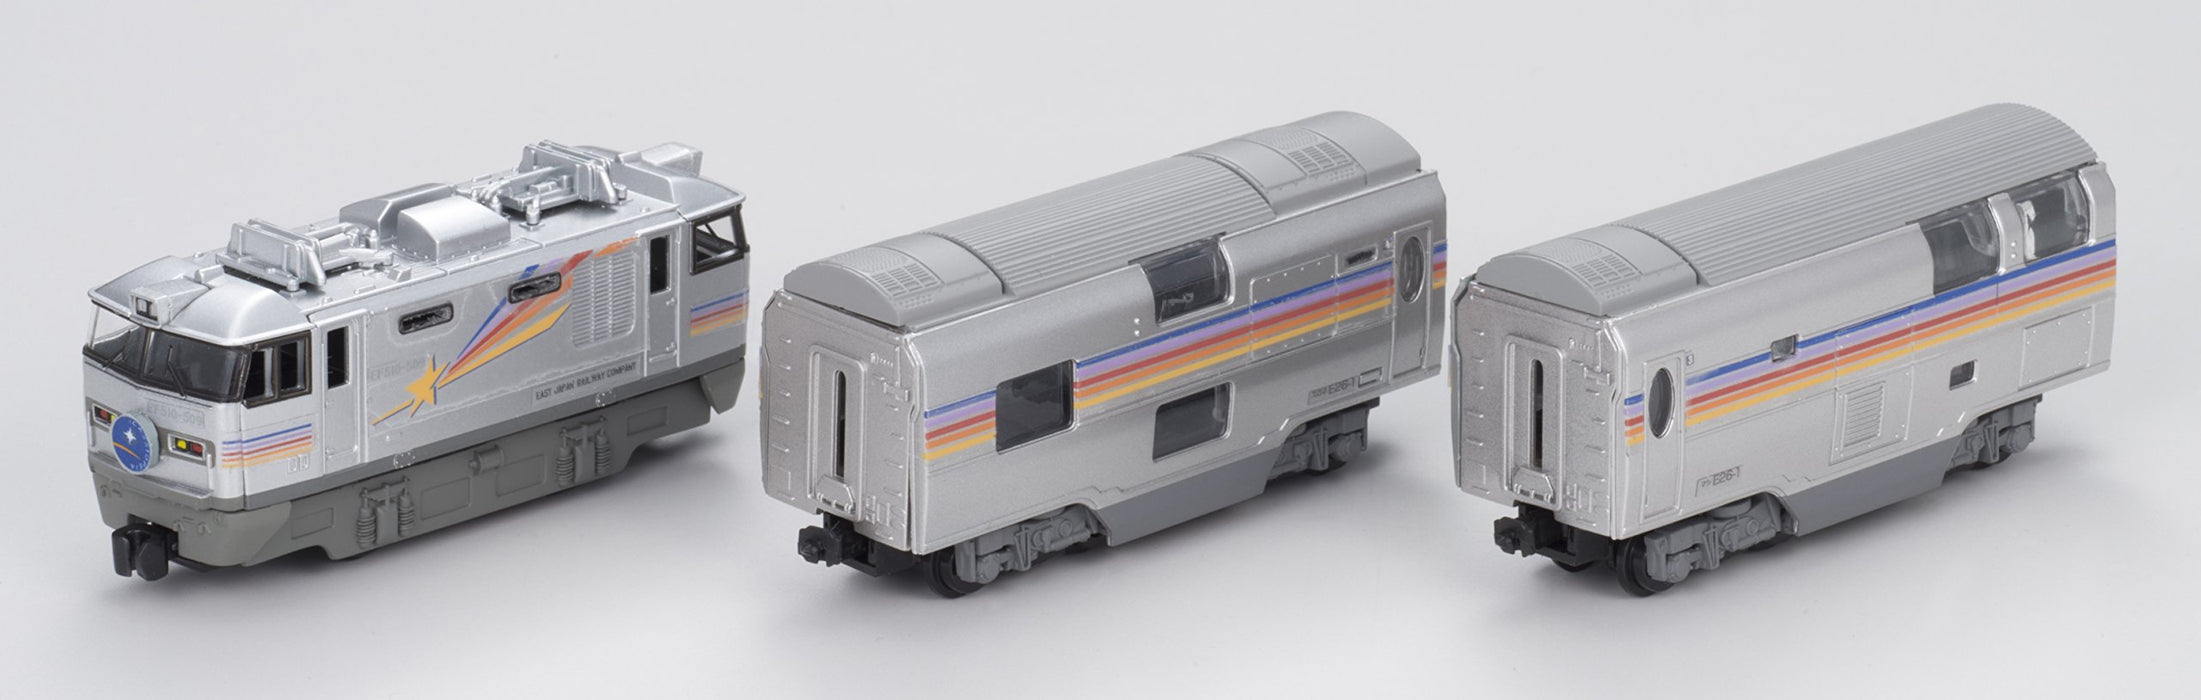 BANDAI - B-Train Shorty Sleeping Express 'Cassiopeia' Set A 3 Cars Set - N Scale